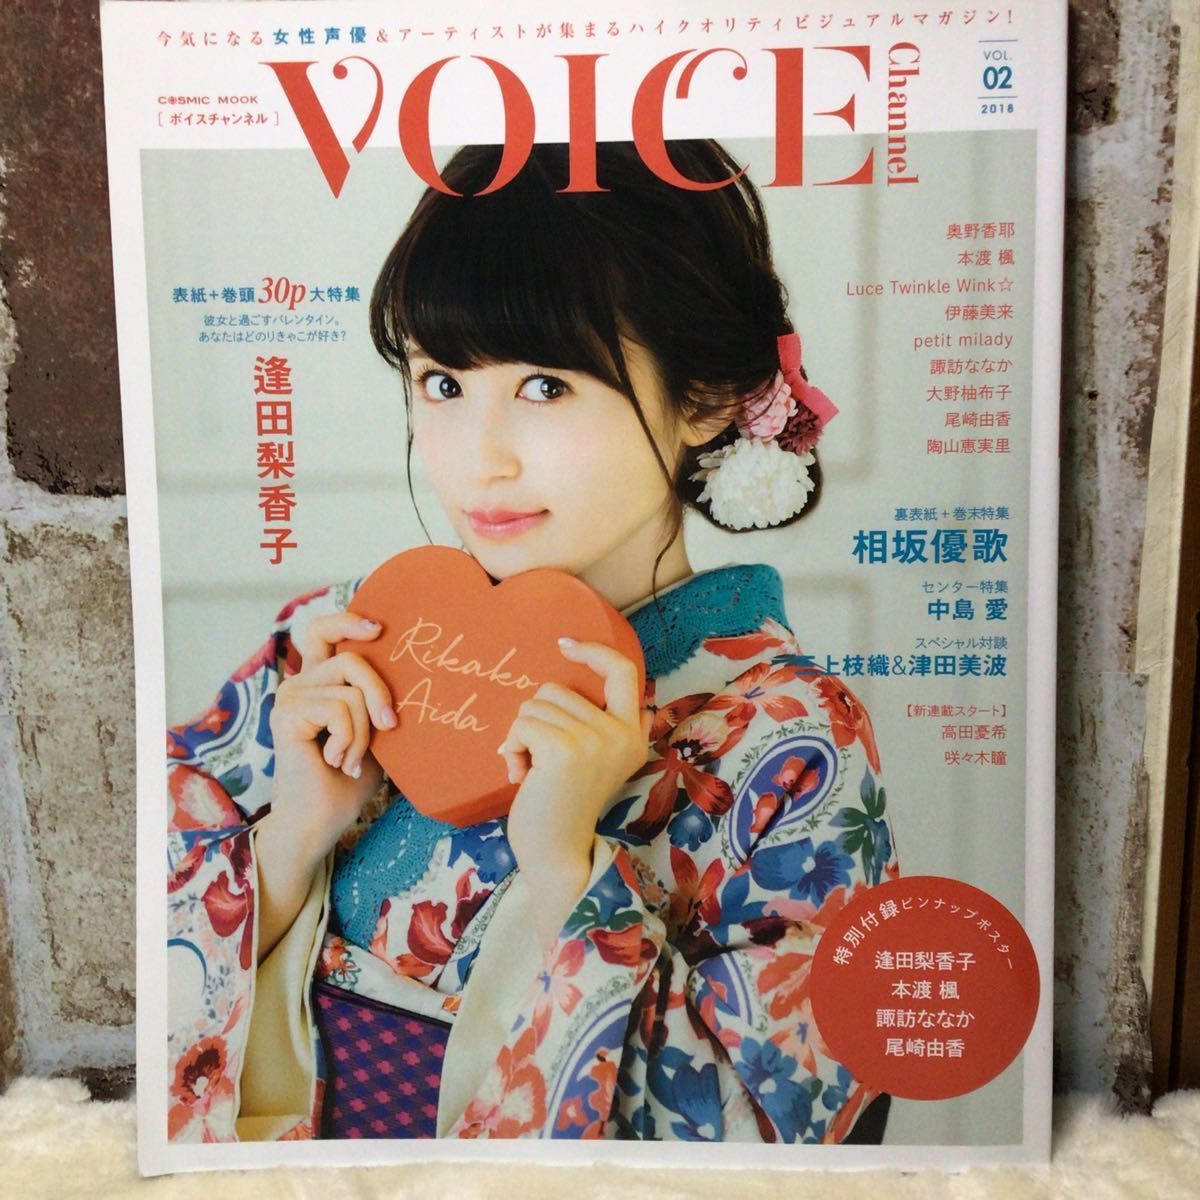 VOICE Channel Vol2 (コスミックムック)特別付録ピンナップポスター